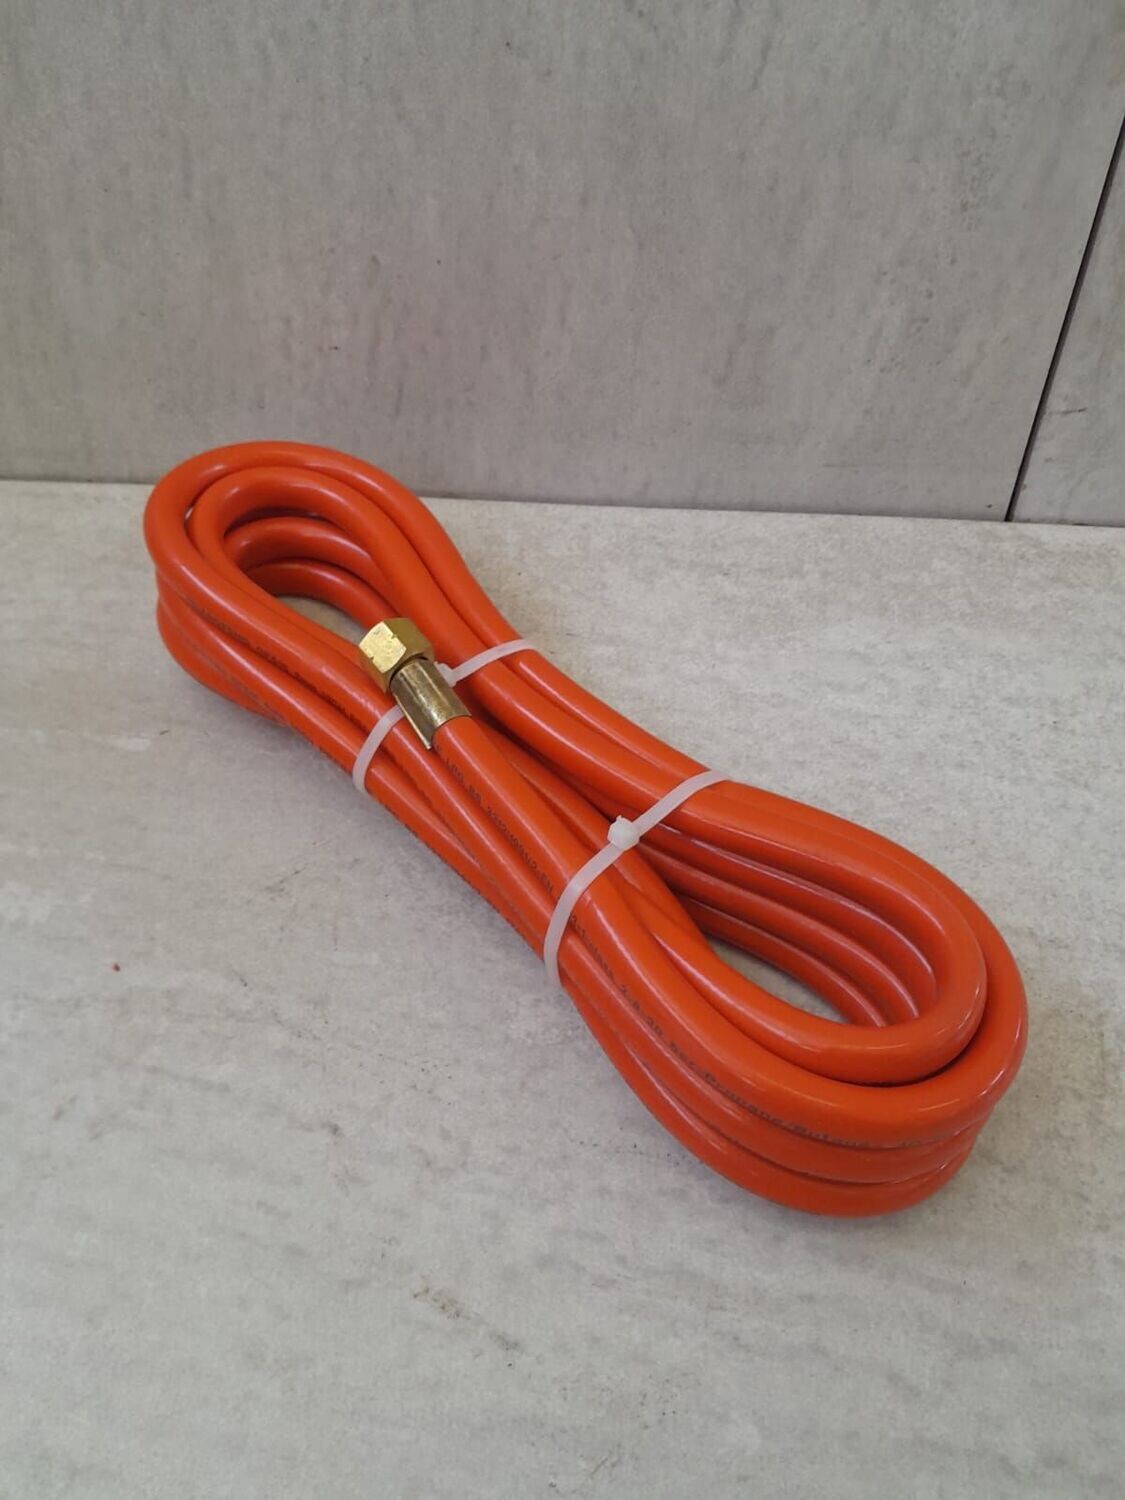 LPG hose: Orange Hose with connections